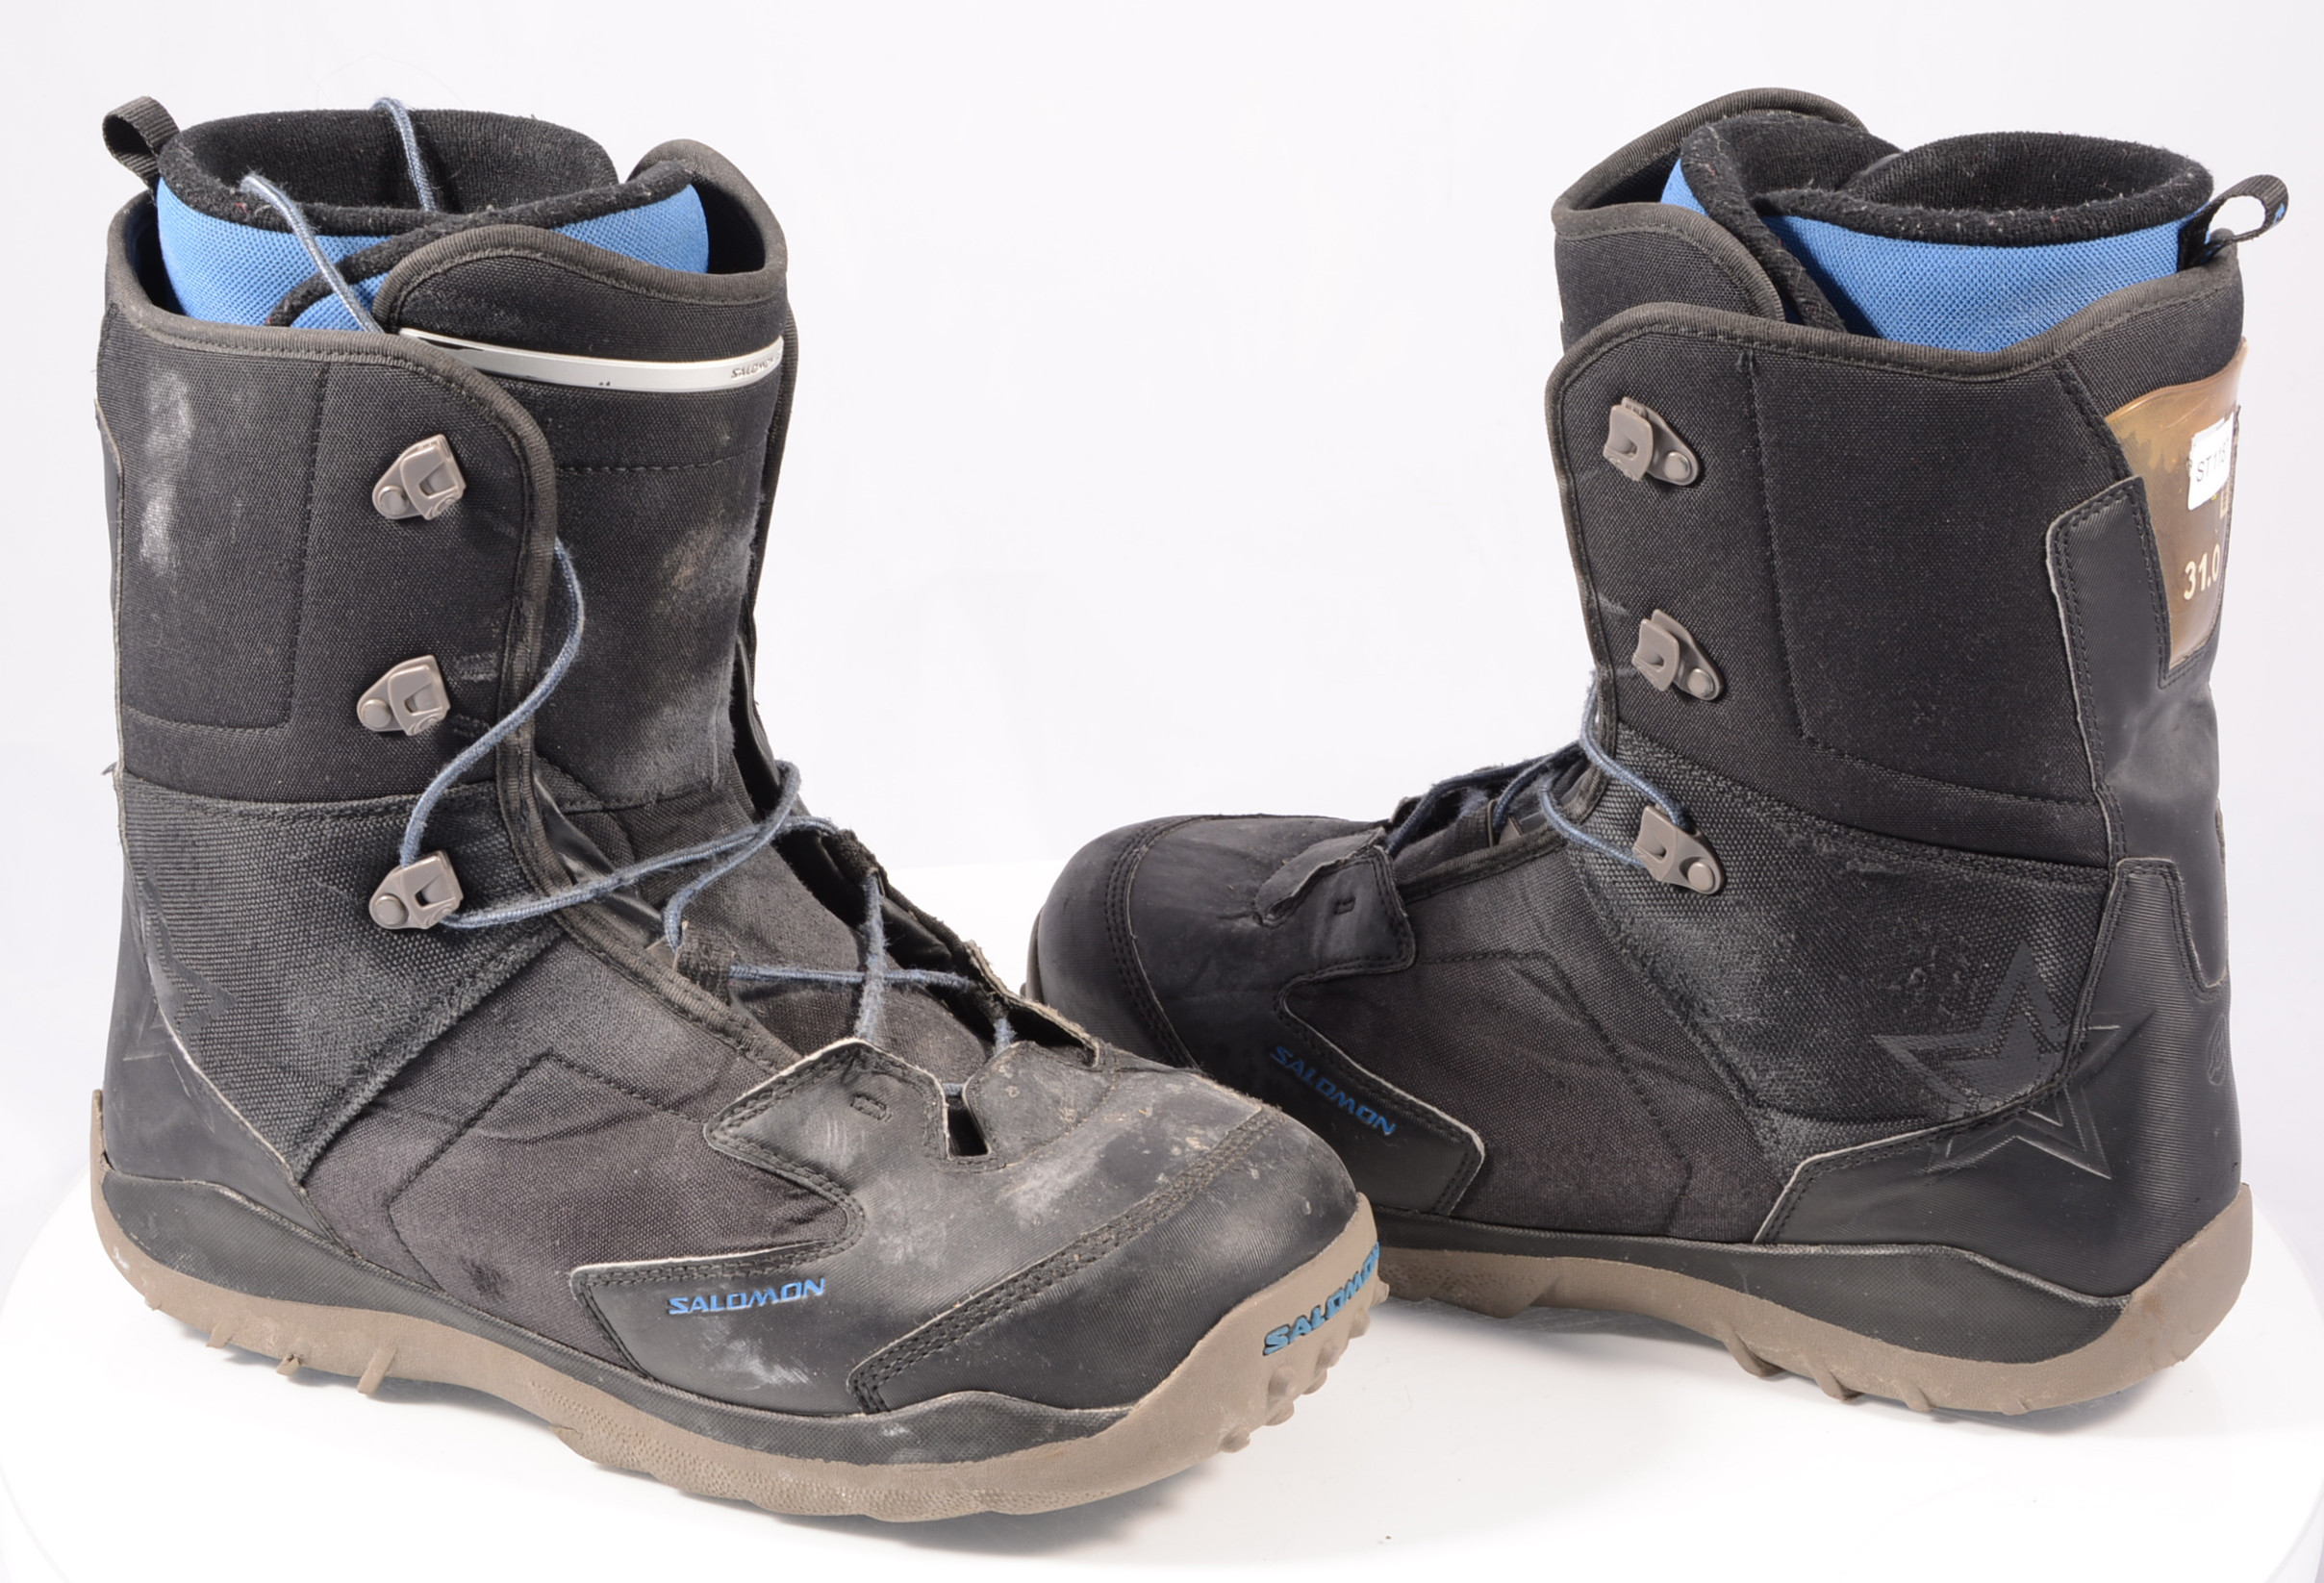 snowboard boots KAMOOKS, THERMIC FIT, BLACK/blue